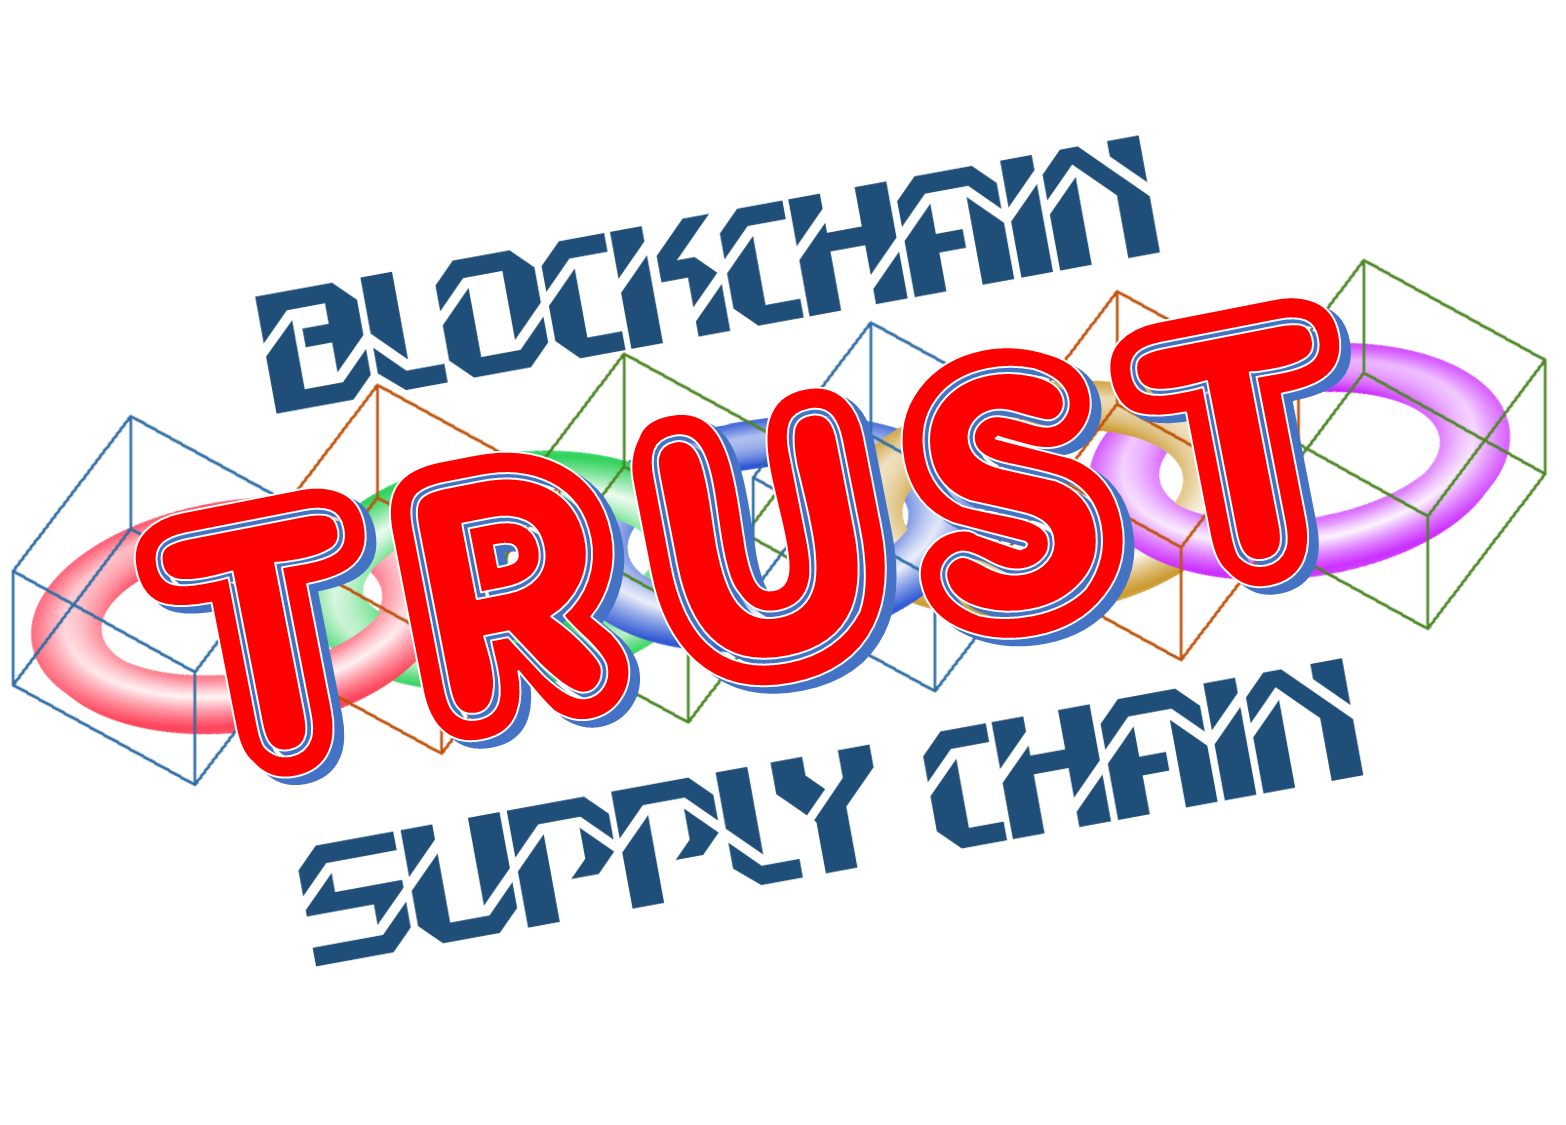 can i trust blockchain